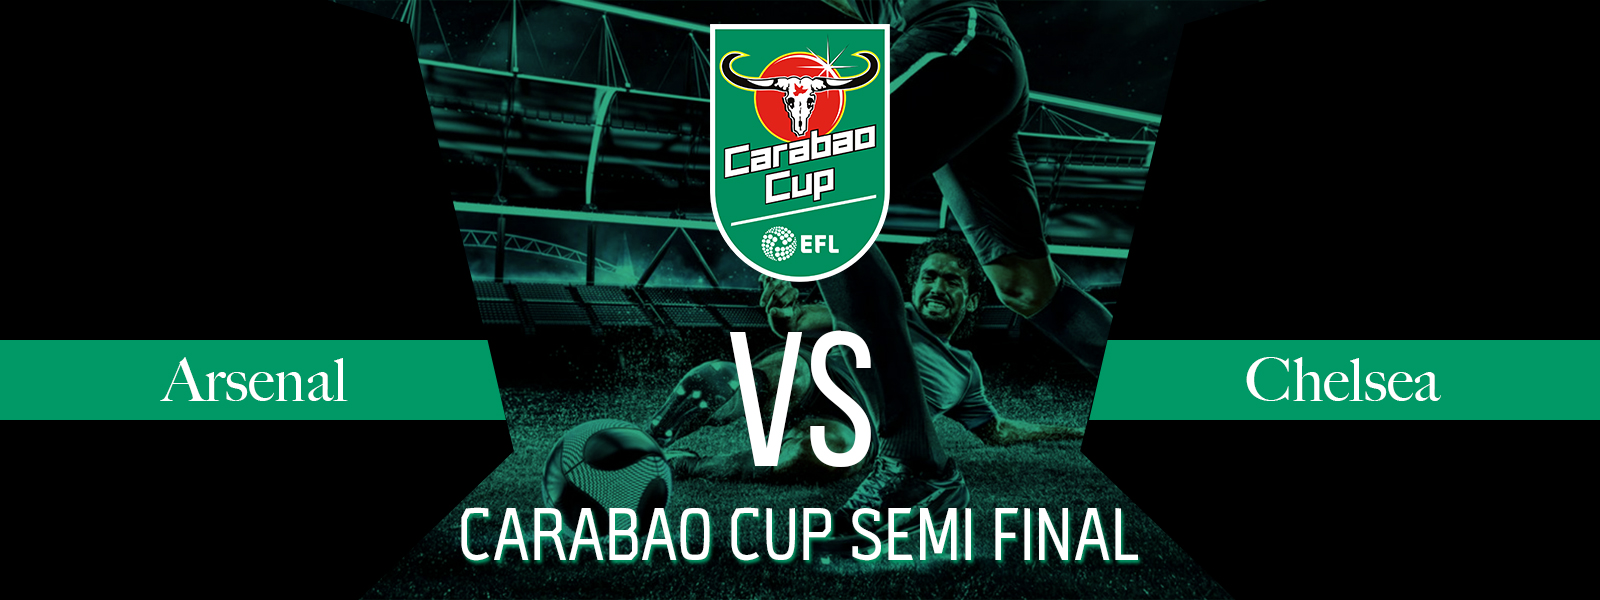 Arsenal vs Chelsea: Carabao Cup Semi Final